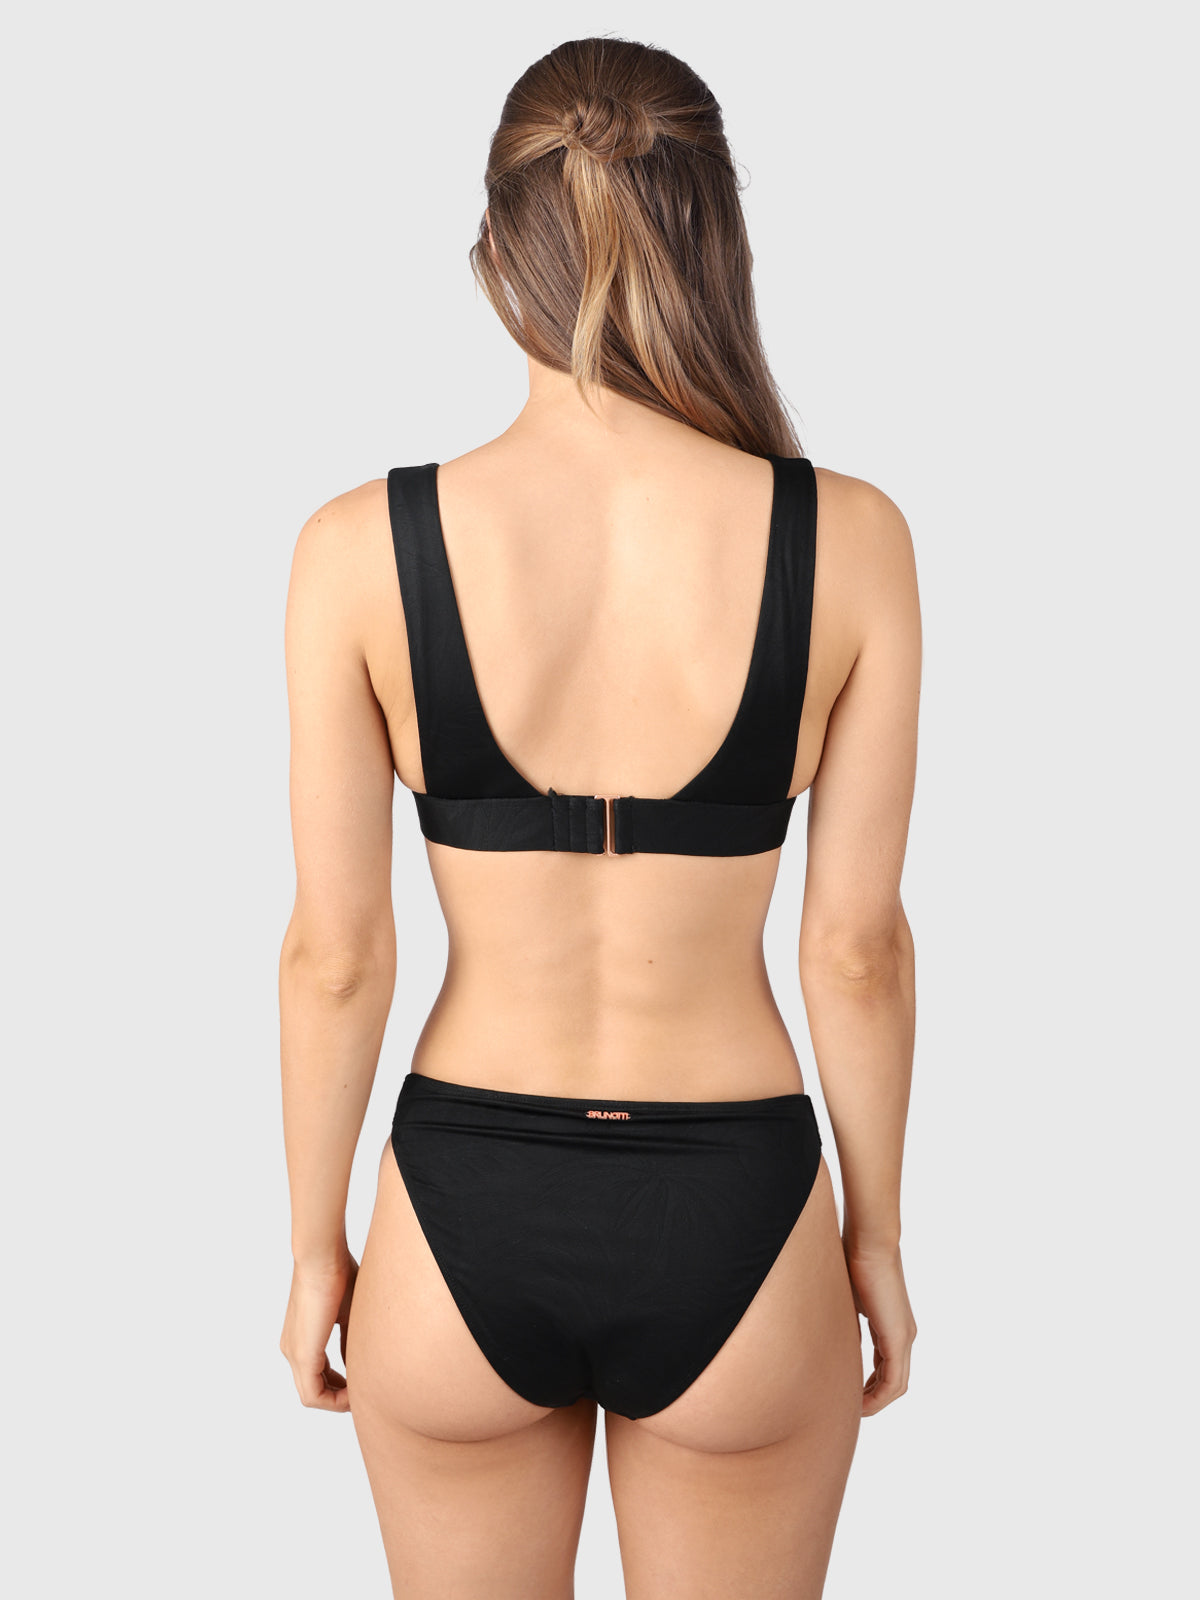 Bodhi-Leaves Women Bralette Bikini Set | Black